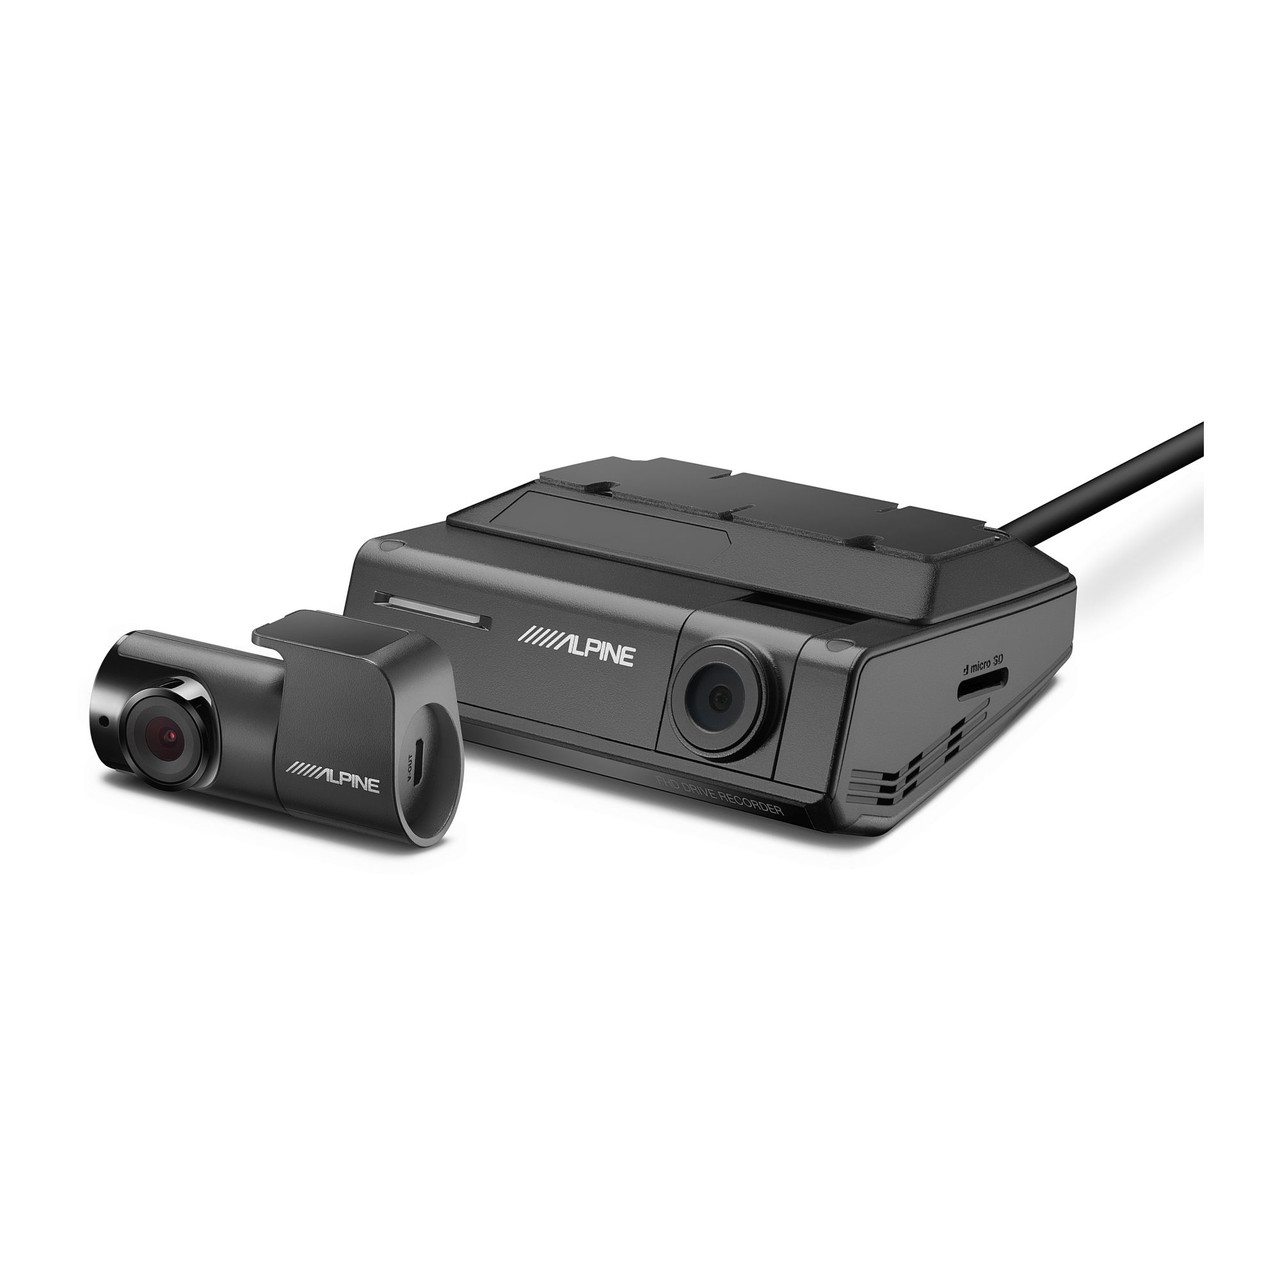 Vehicle DVR Dashcam Camcorder - Super Dash Cam - 1080P Full HD